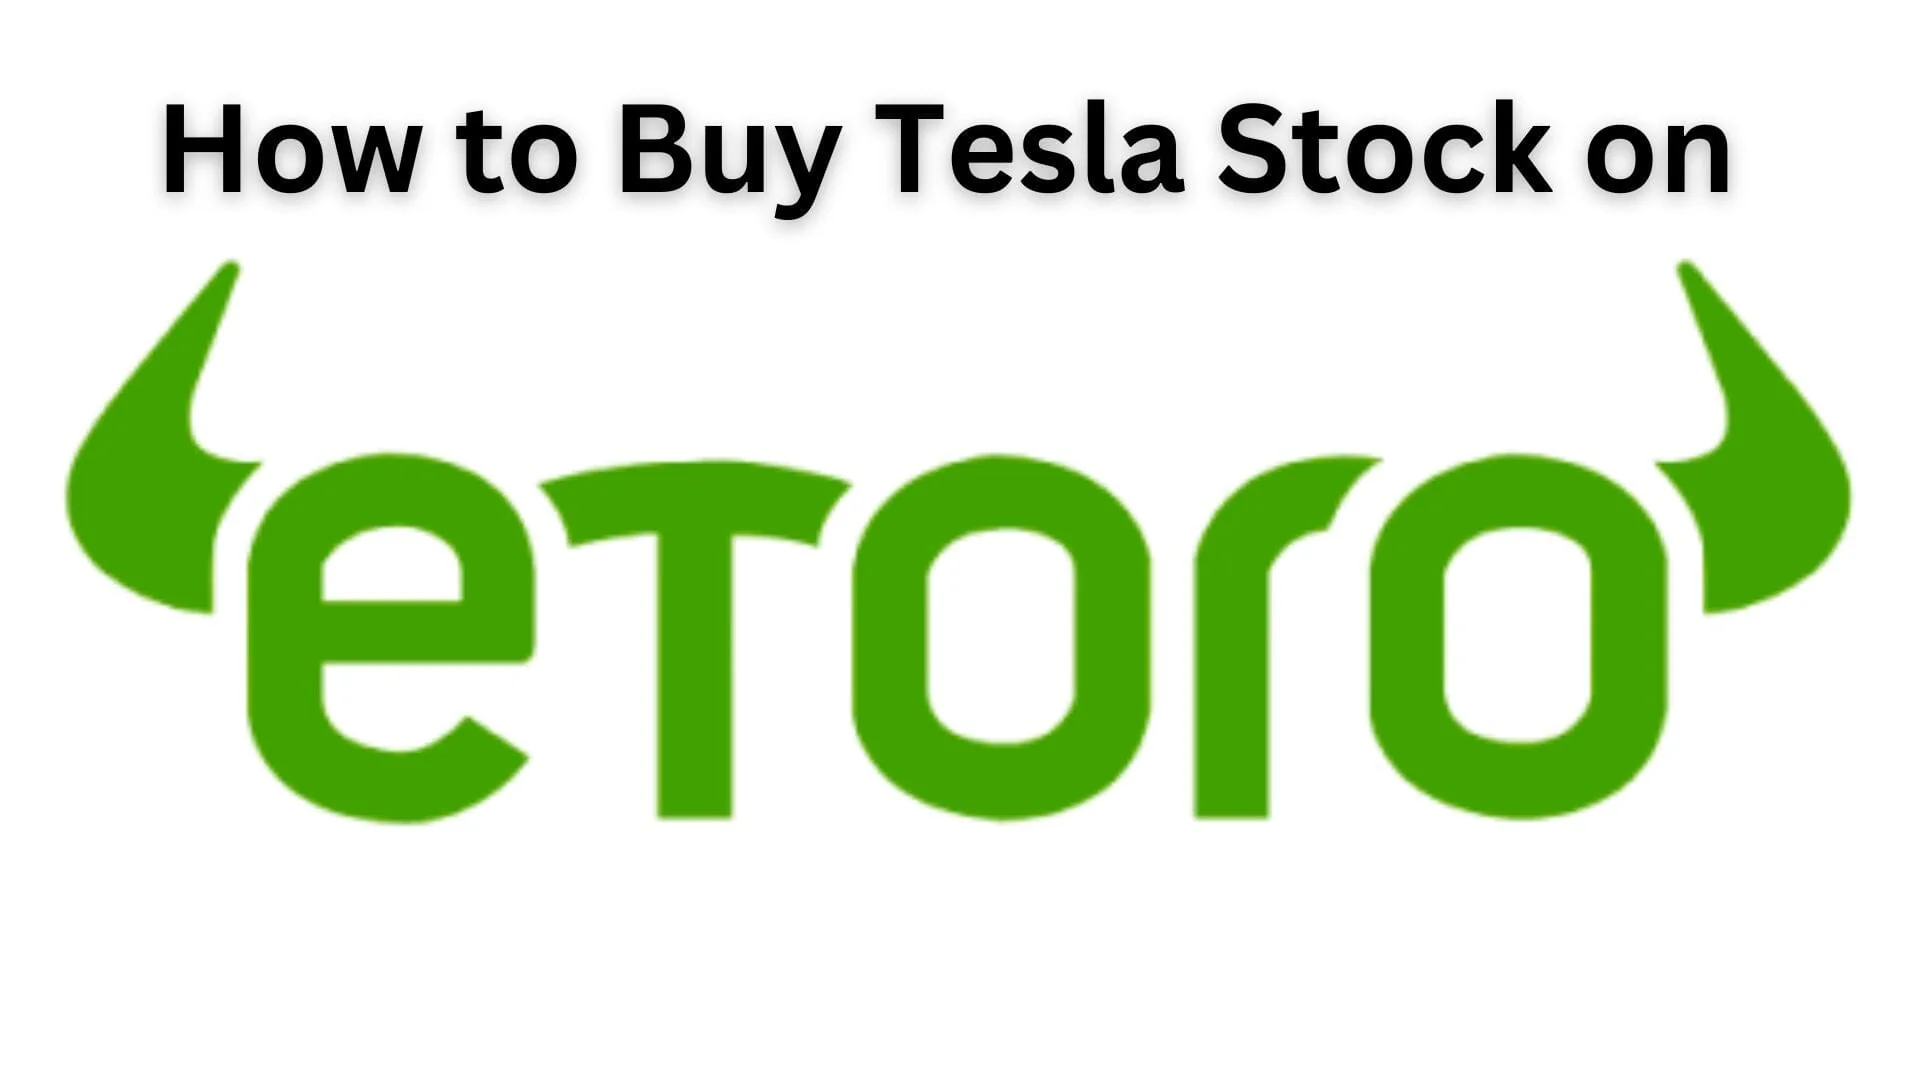 Buy Tesla Stock on eToro: A Smart Investment Move